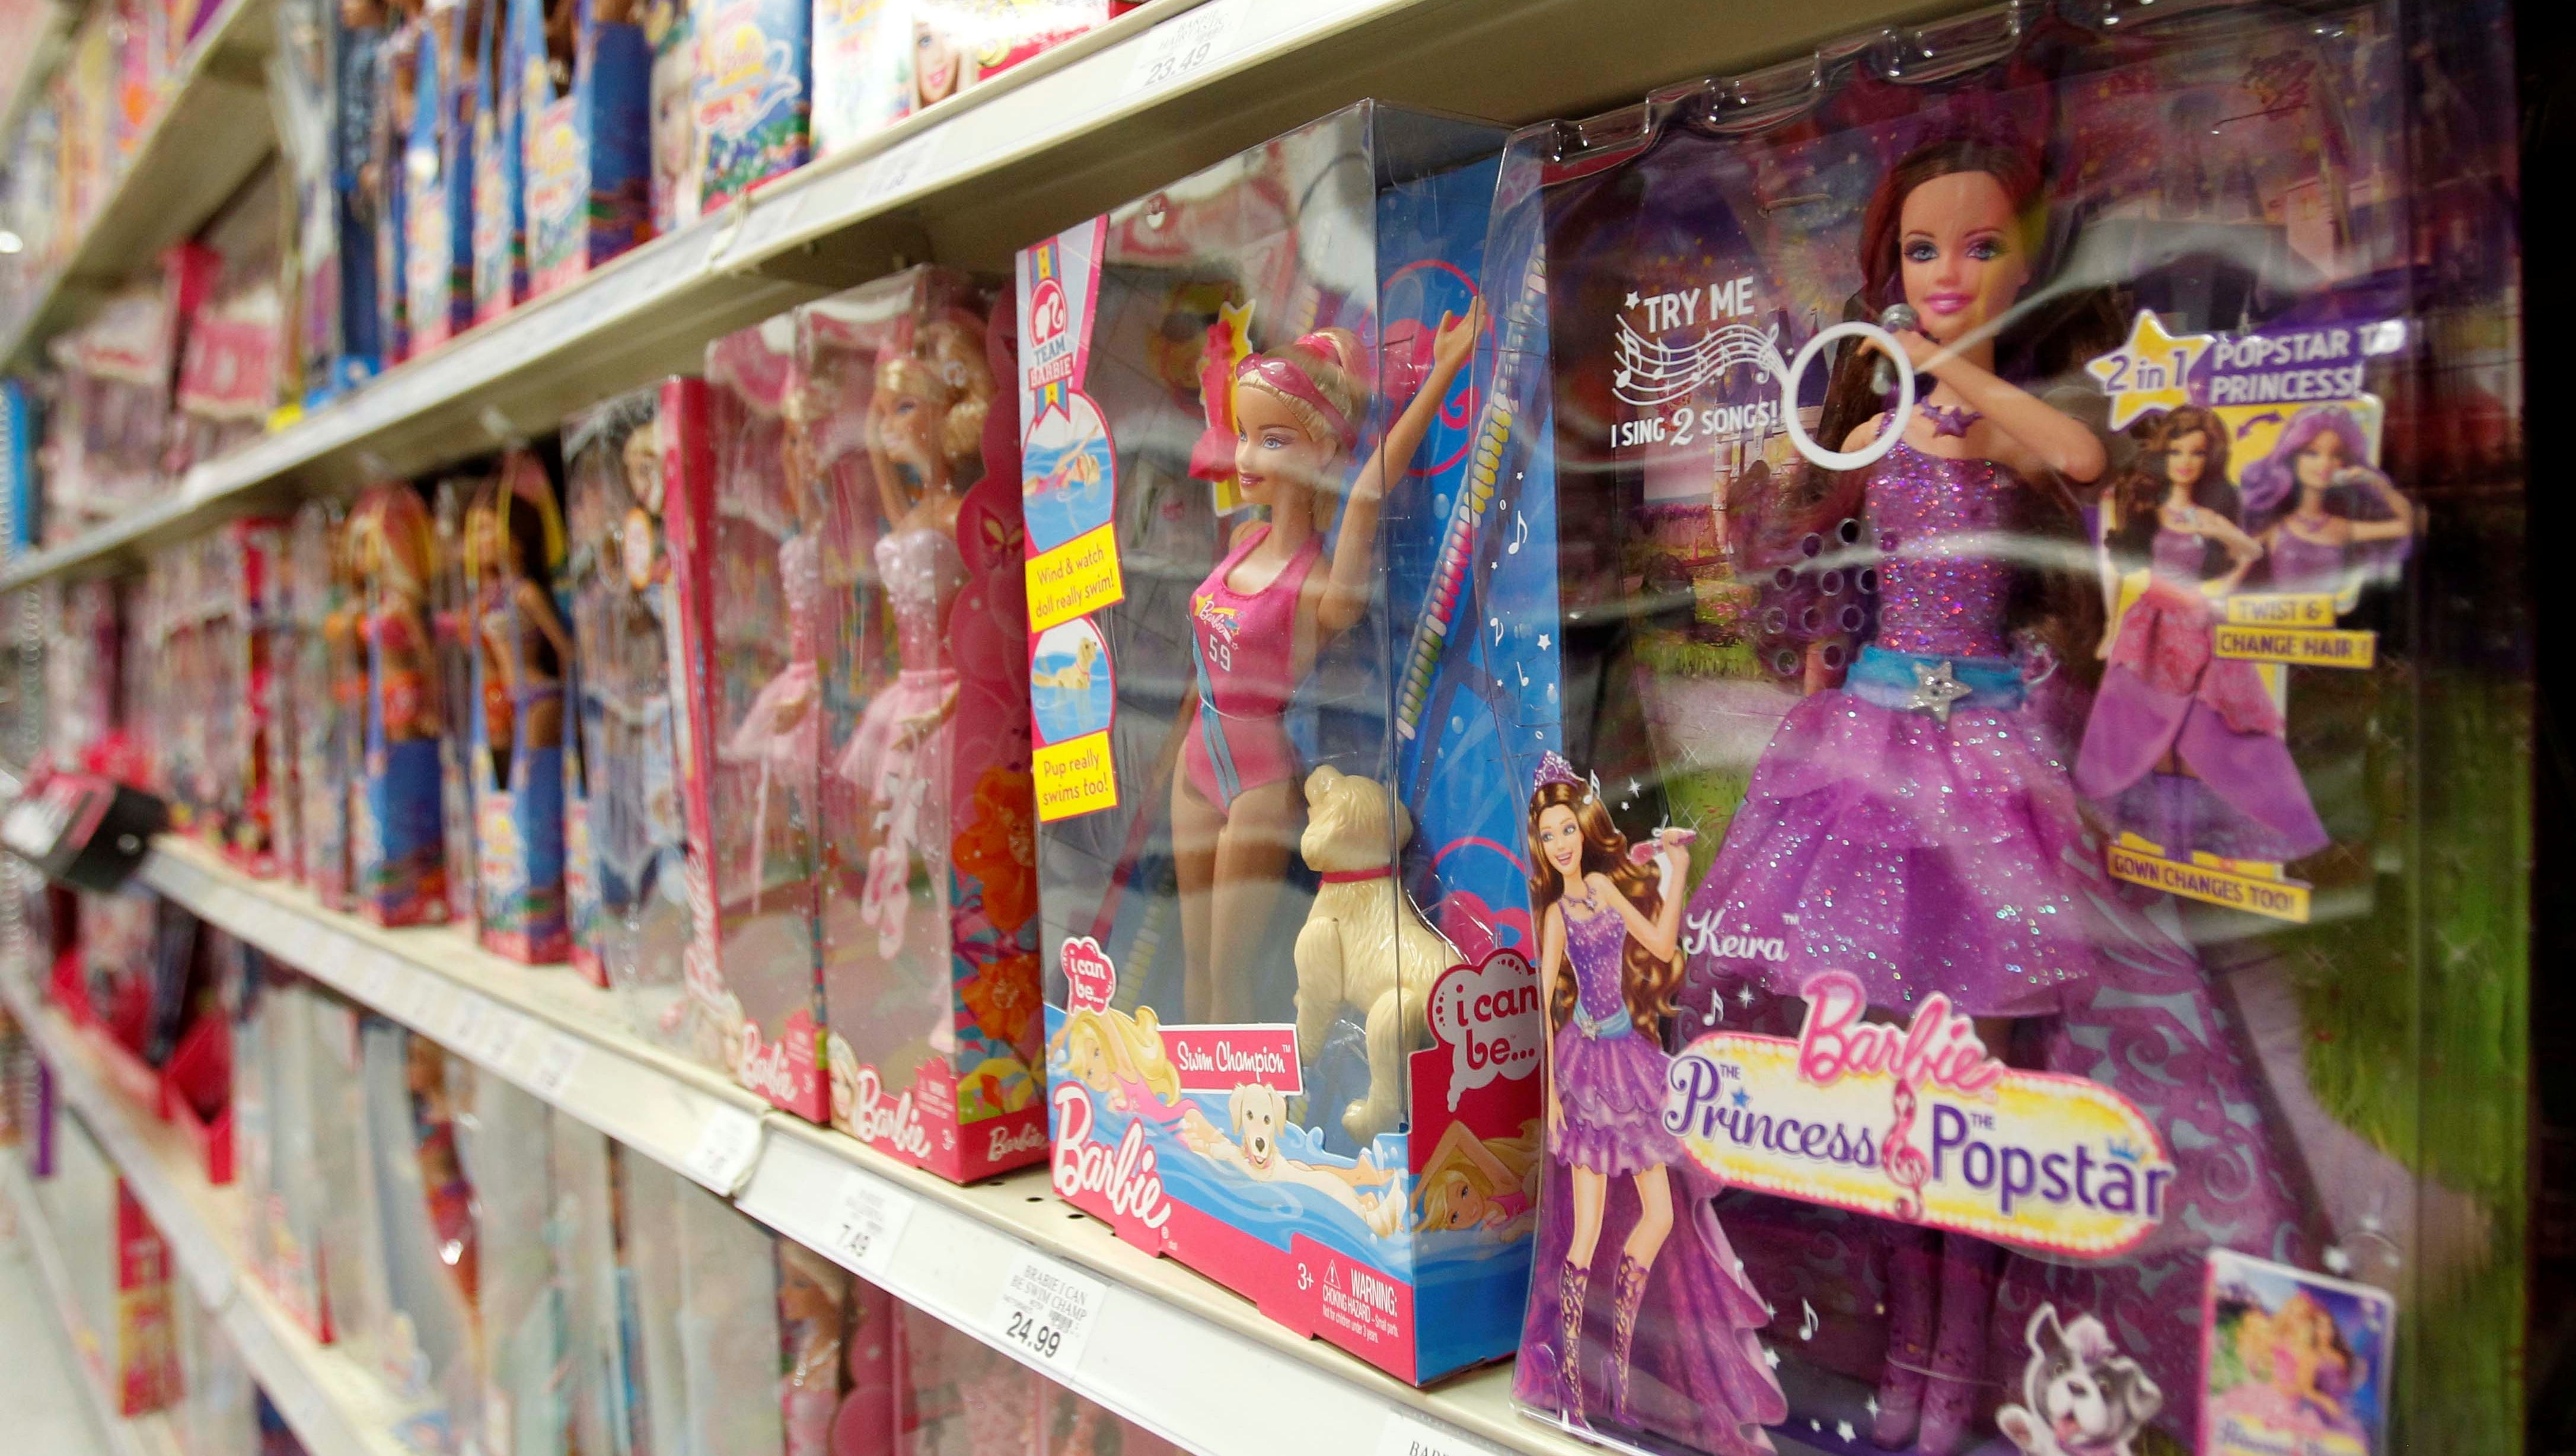 Barbie Sales Slide As Mattel Profit Falls